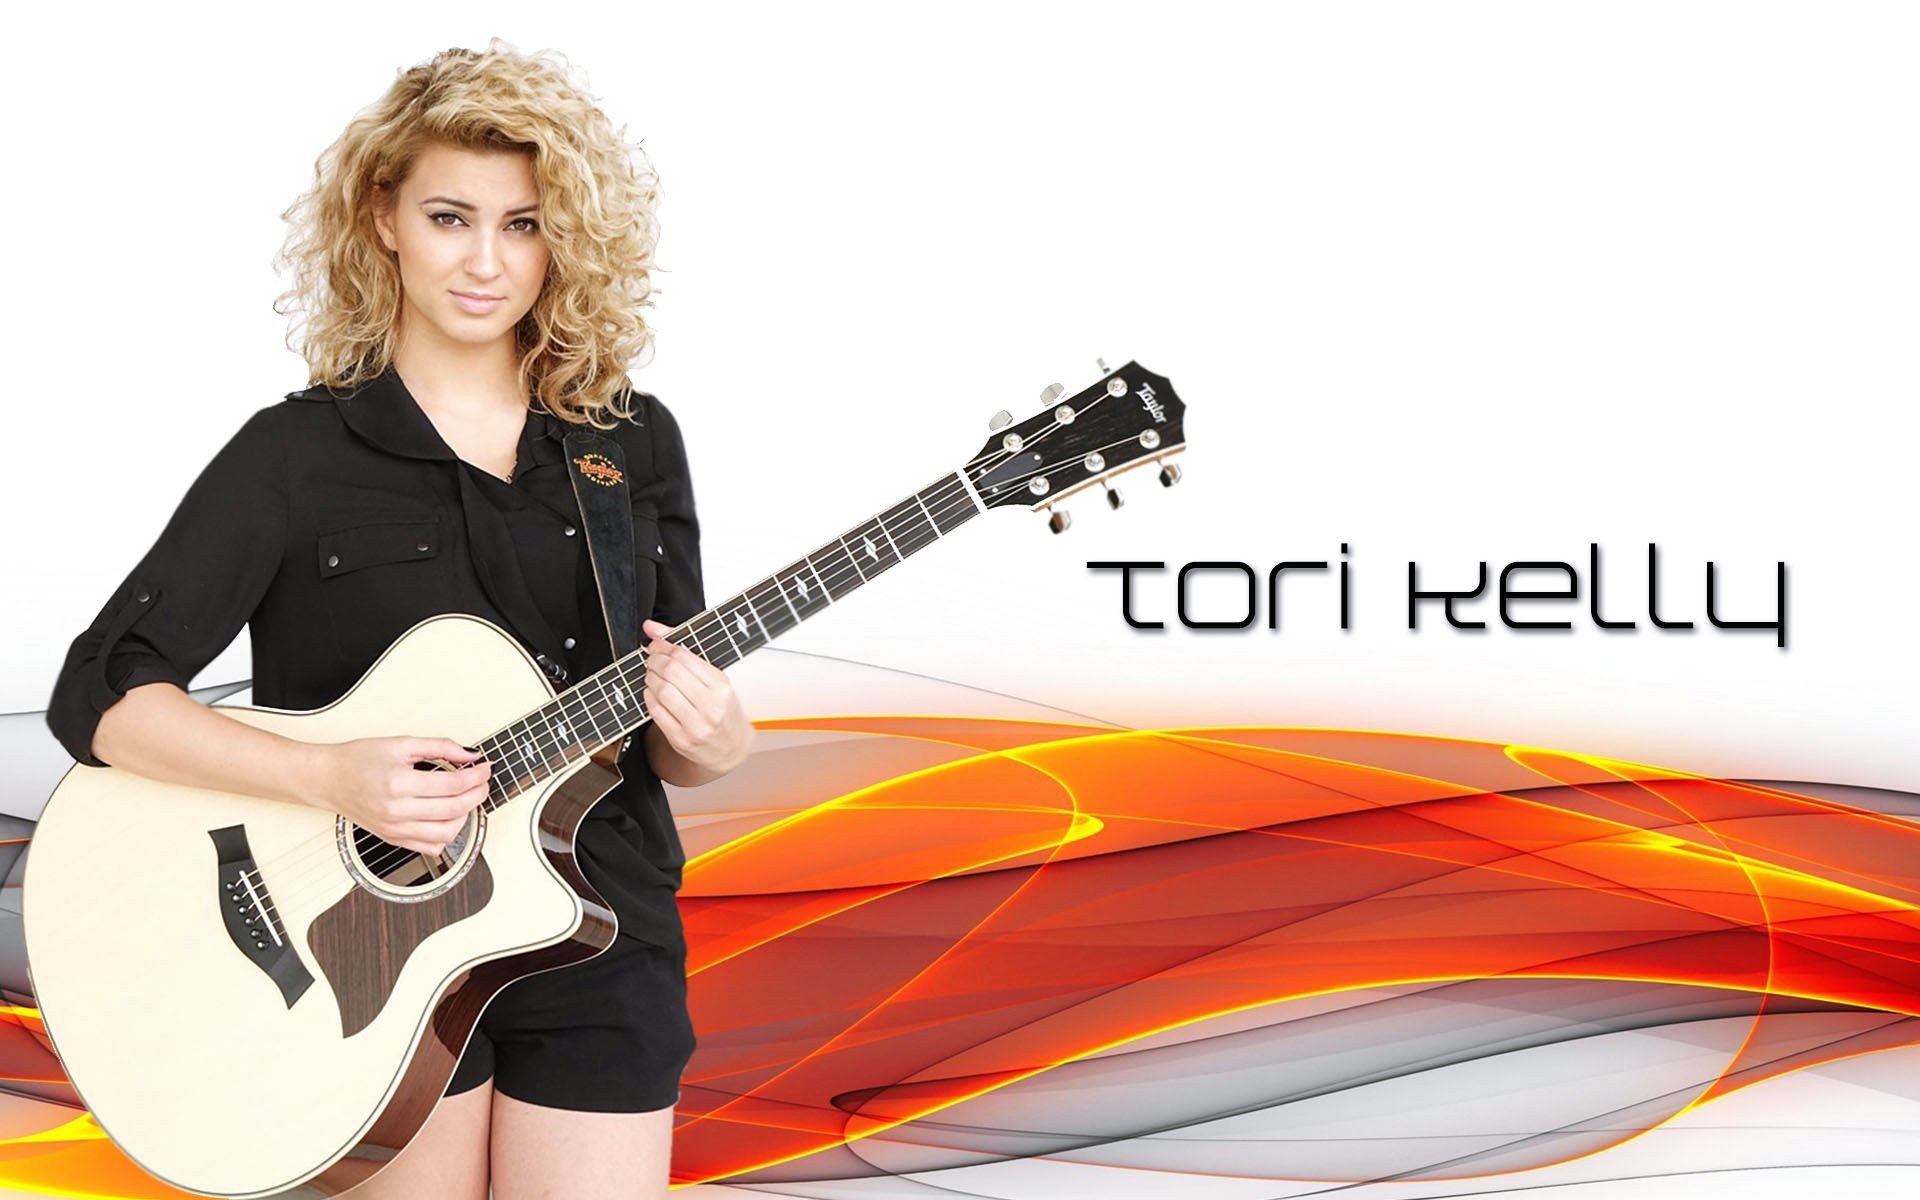 tori, Kelly, Pop, Singer, Soul, R b, Poster, Guitar Wallpaper